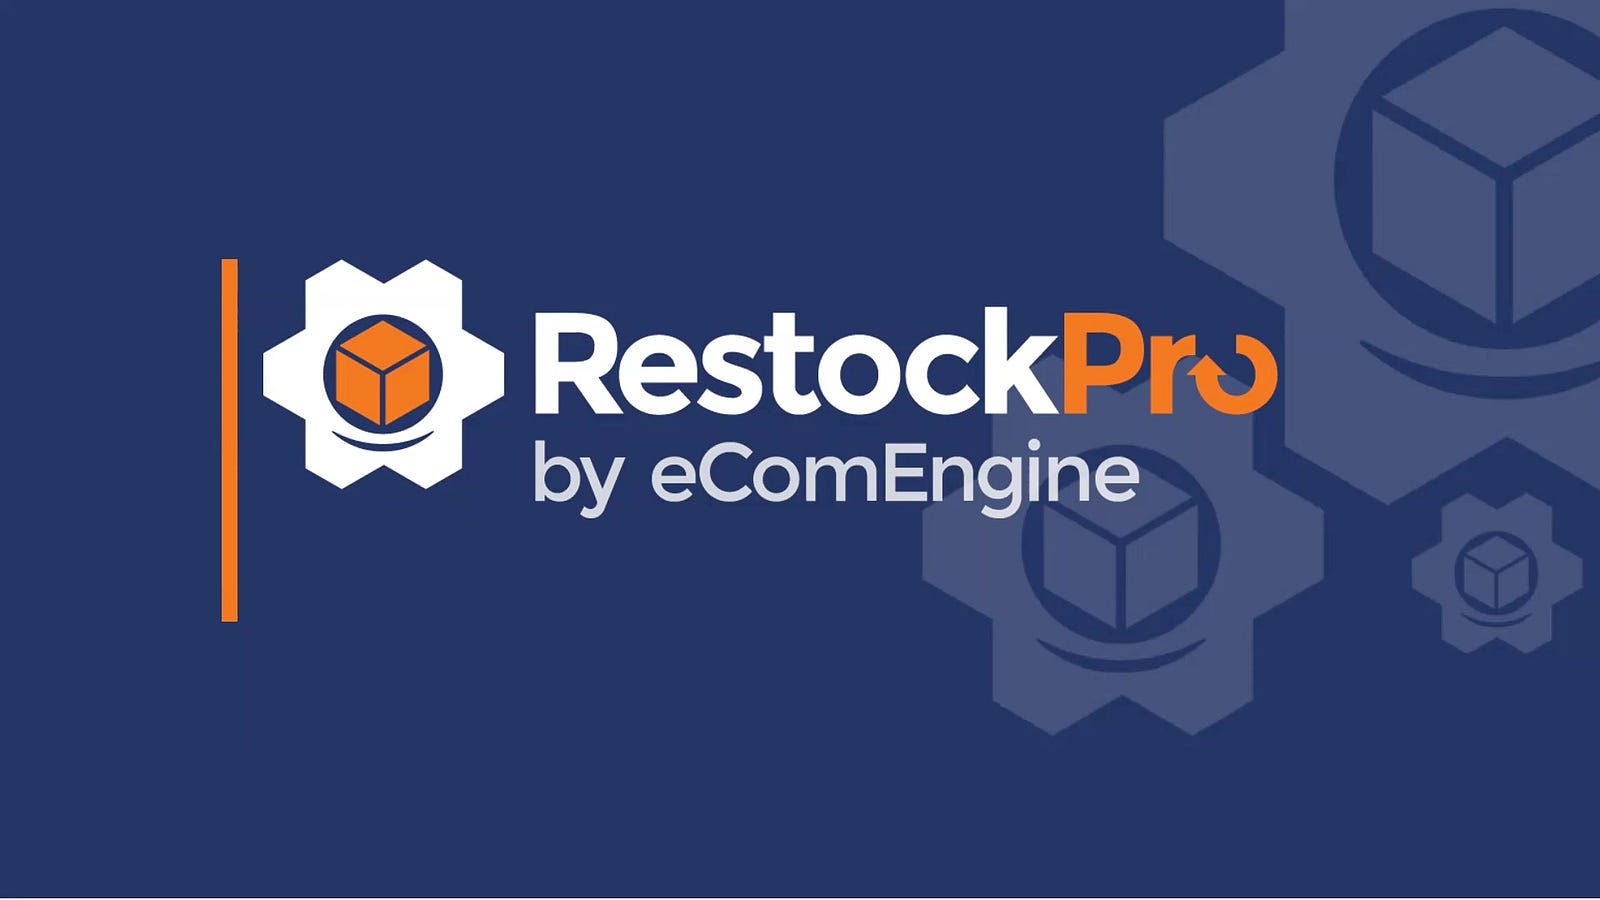 restock pro by ecom engine for Amazon FBA